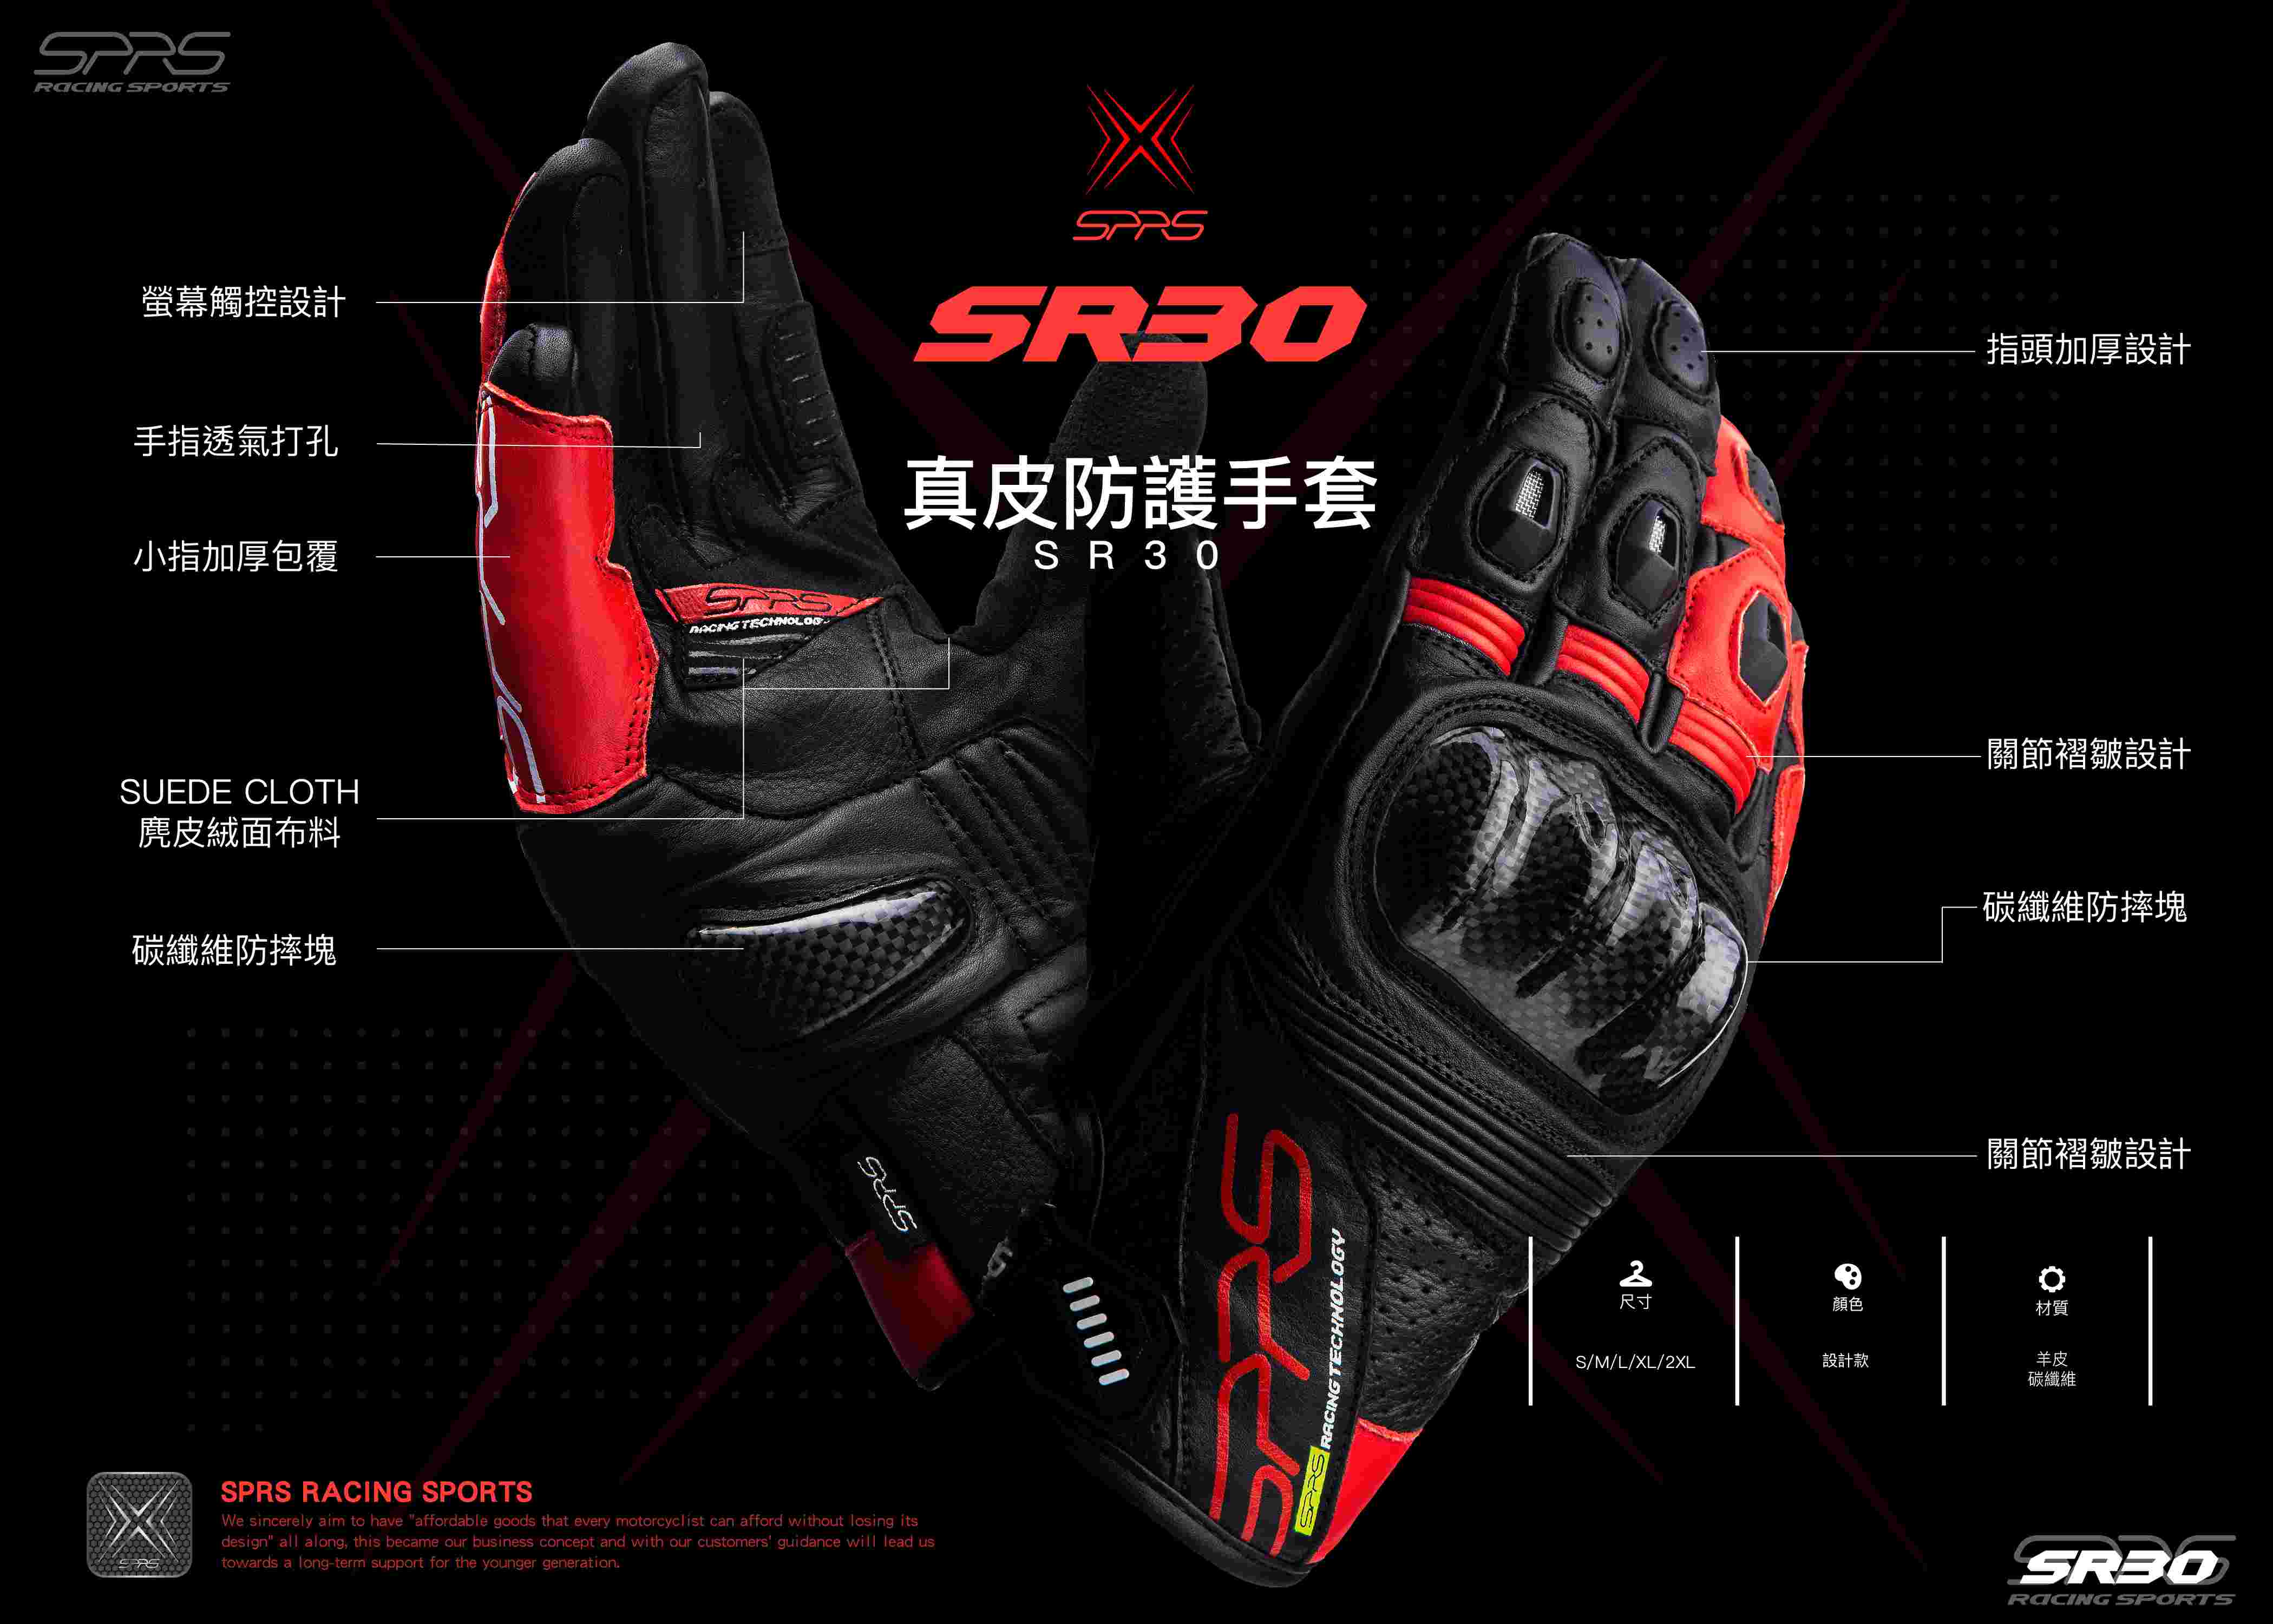 【SPRS(Speed-R Sports)】SR30 真皮防護手套 -  Webike摩托百貨